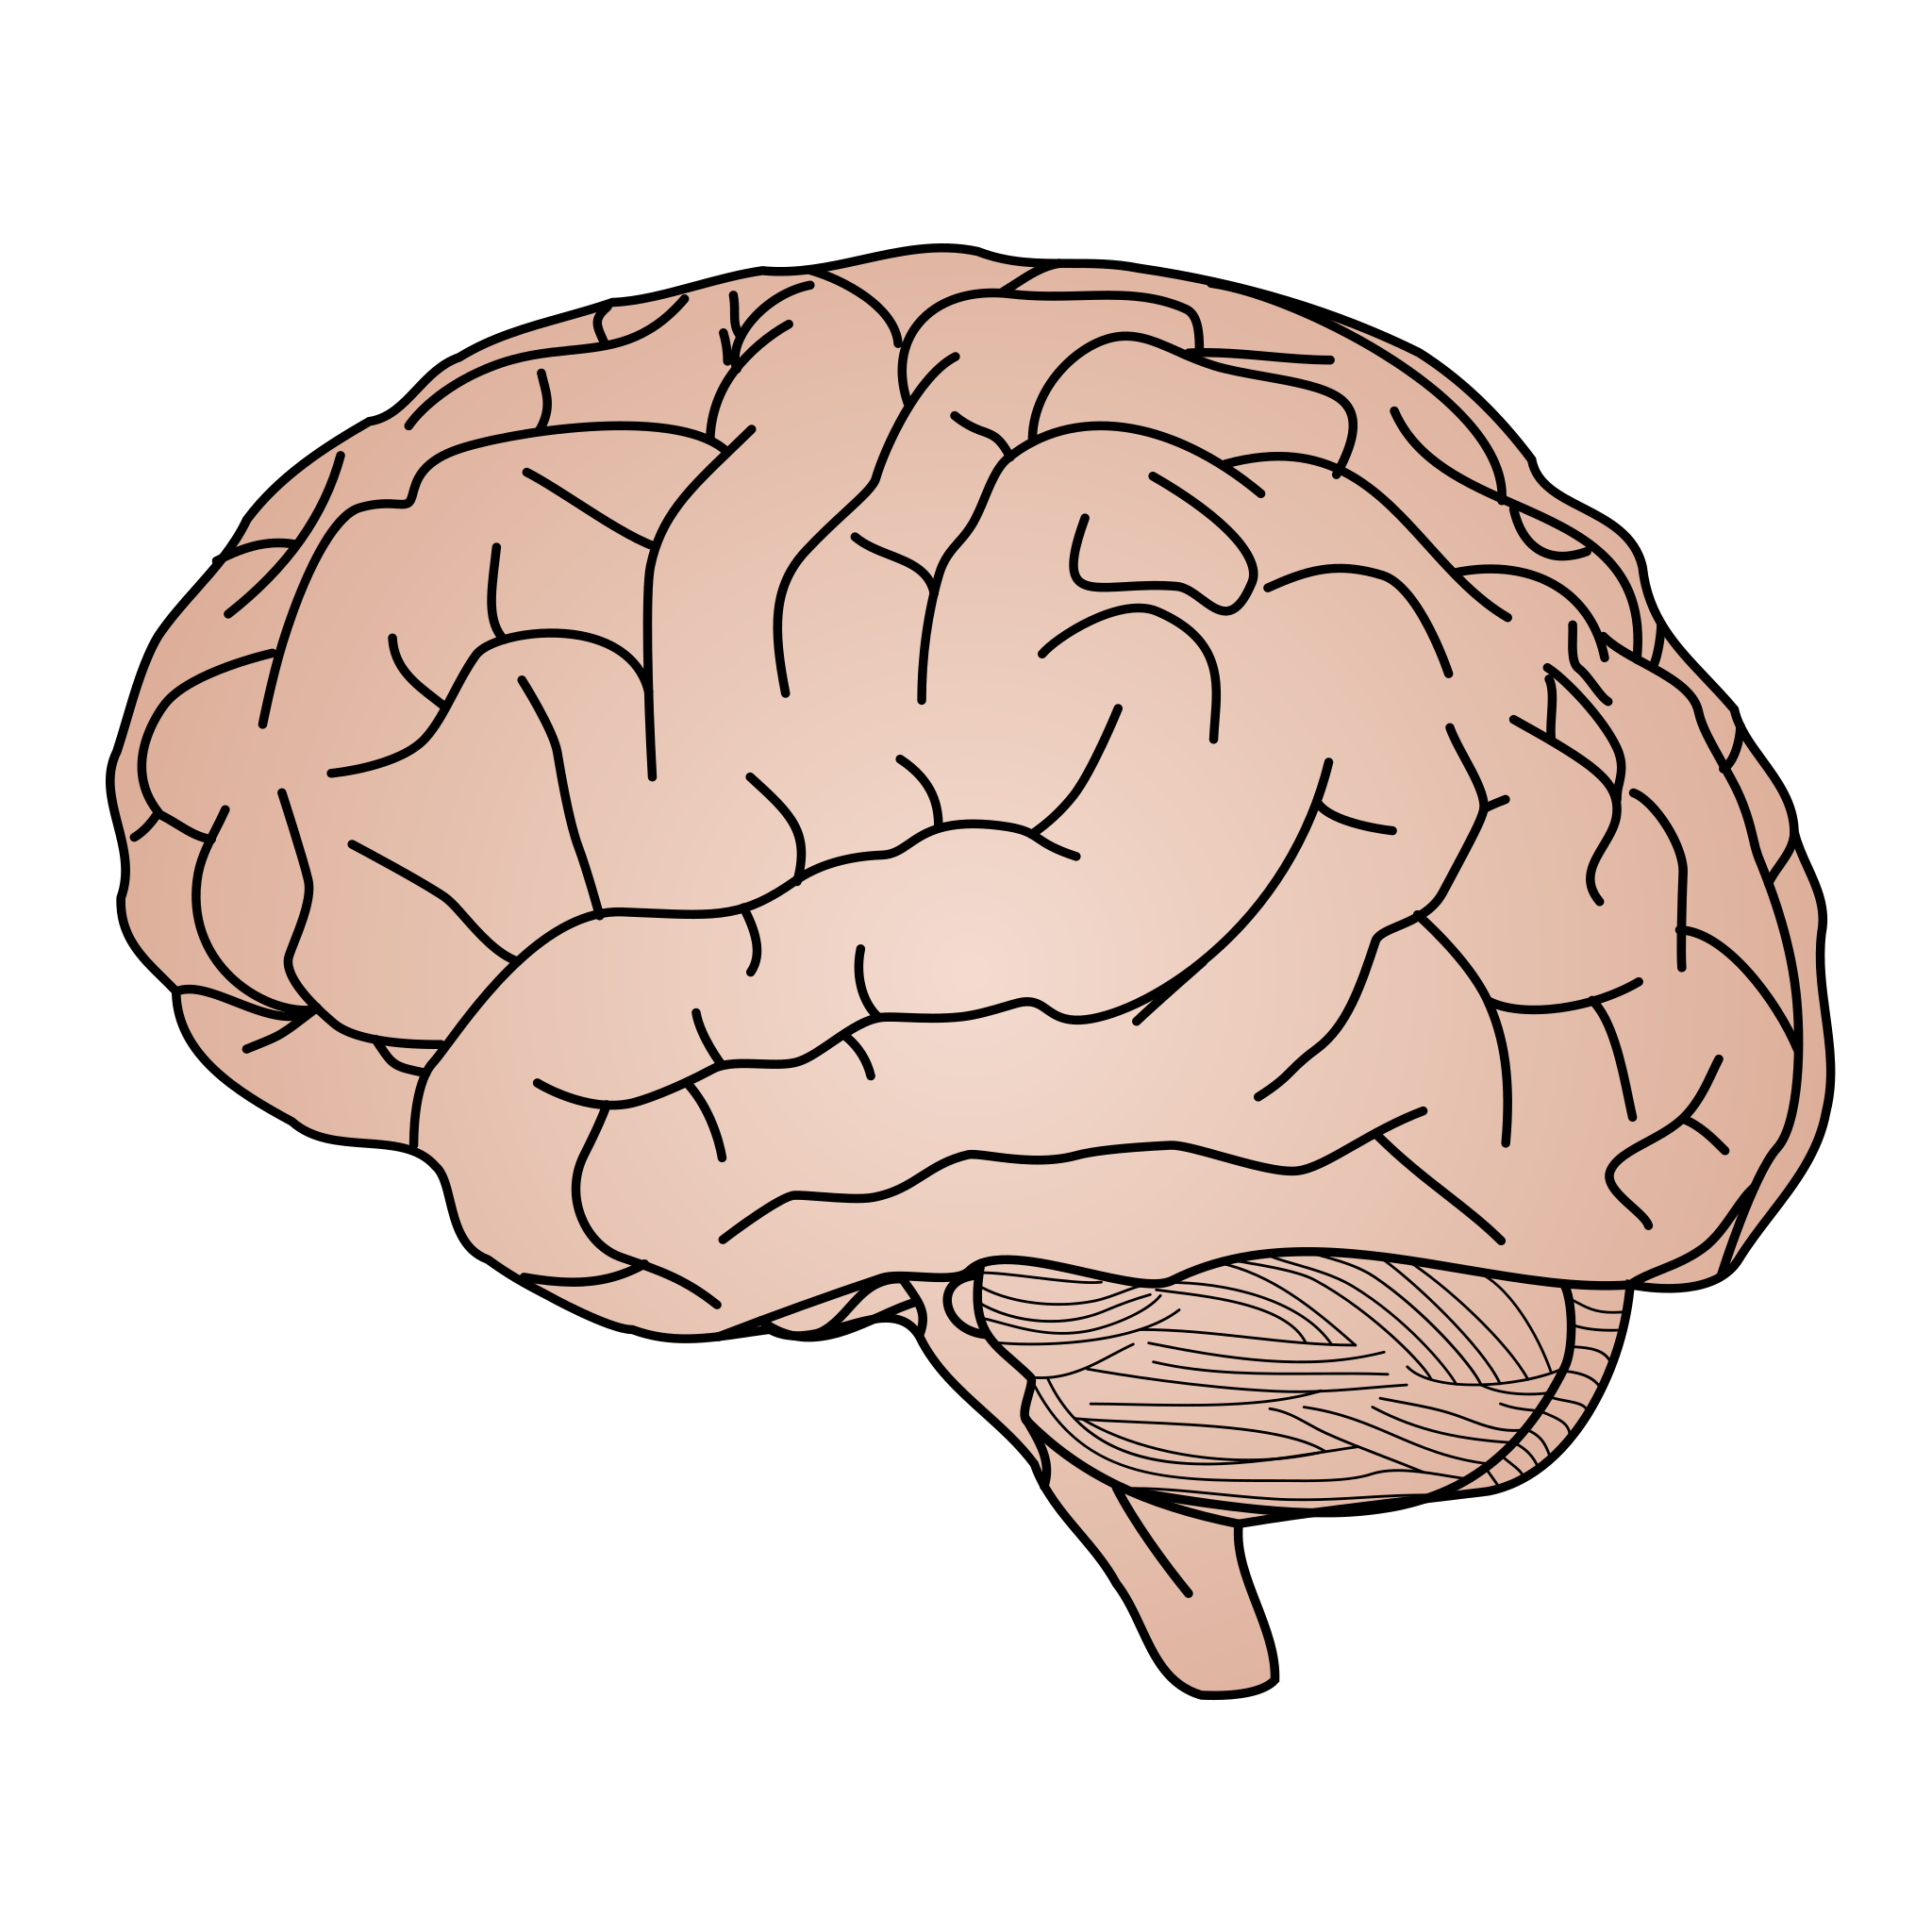 File:Human-brain-vector.svg - Wikimedia Commons